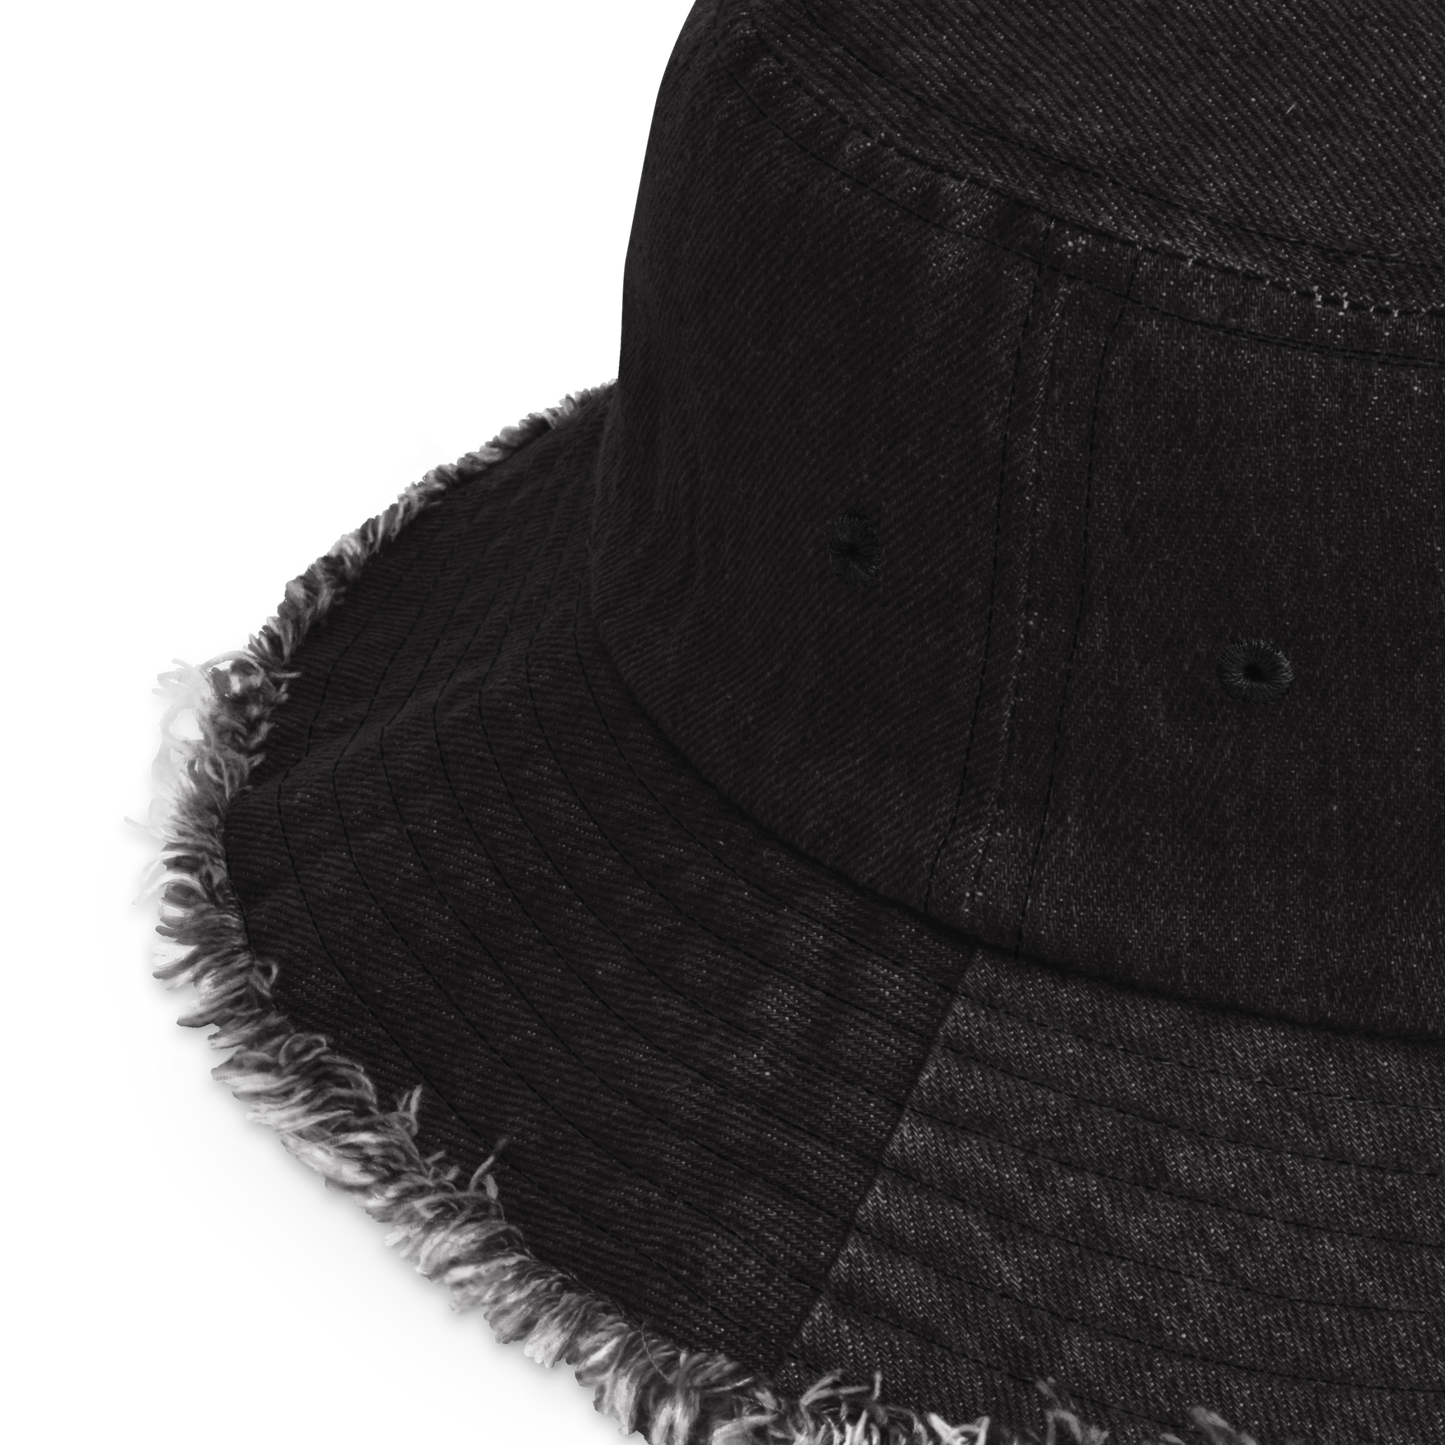 Black as Fuck Distressed Denim Bucket Hat